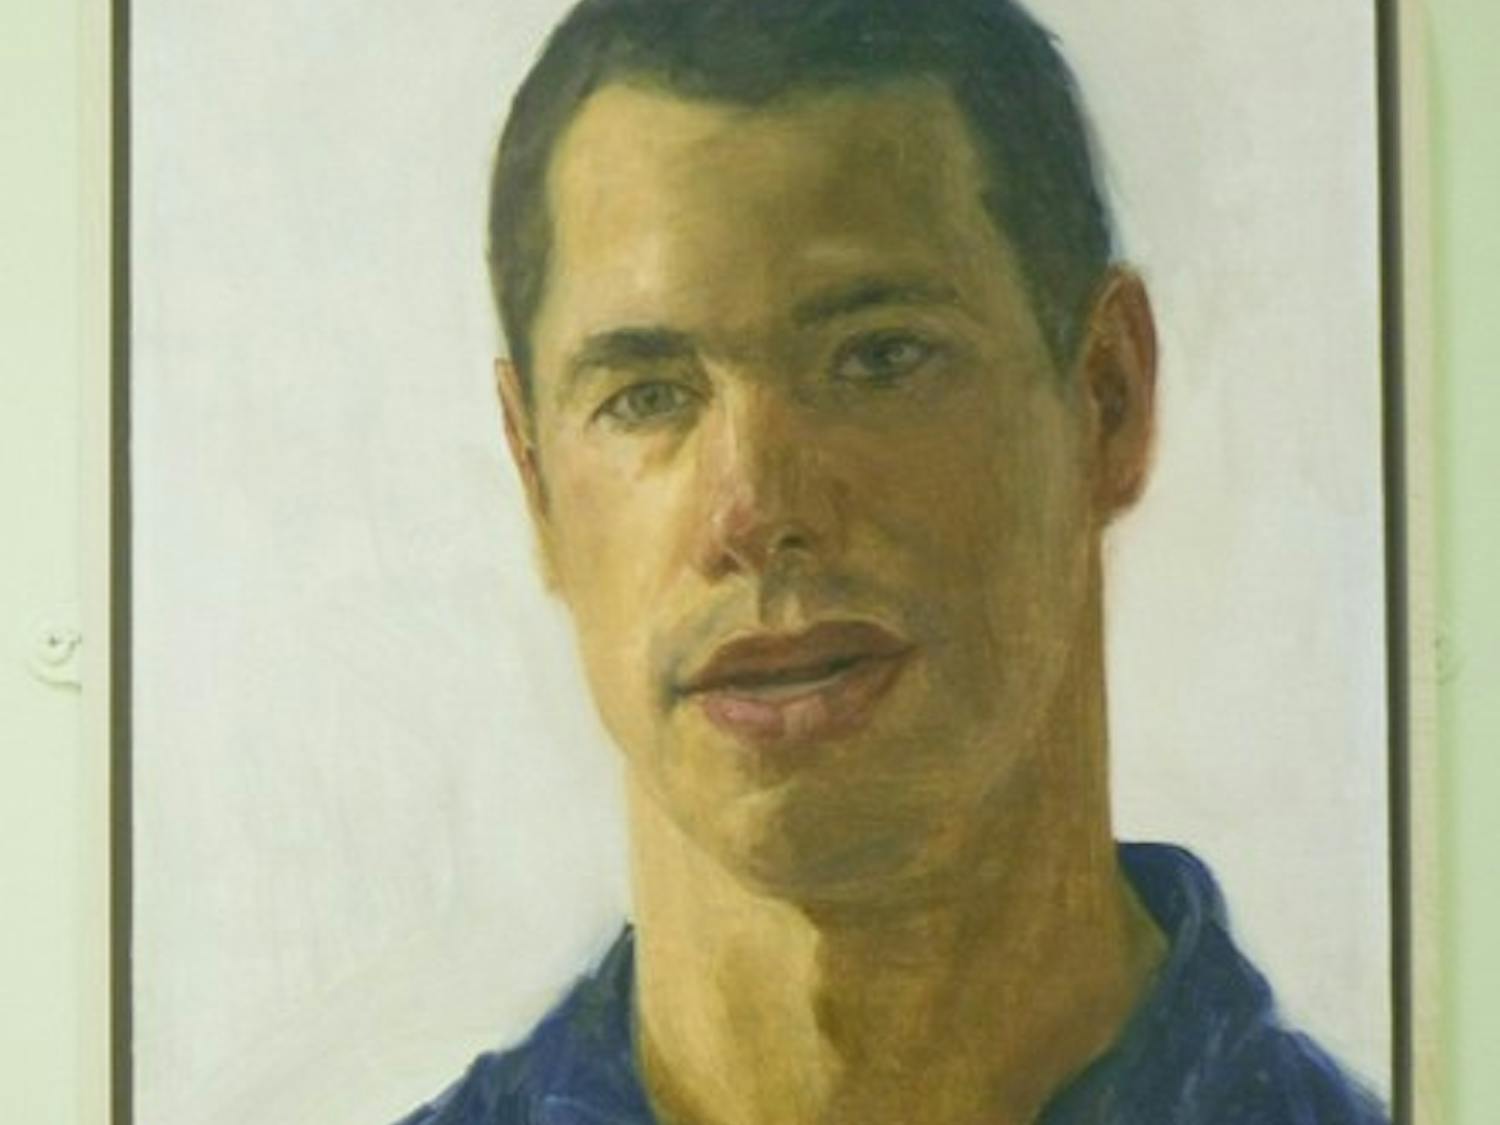 Felix de la Concha's portrait of Andrew Zabel '09 hangs in the main hall of Baker Library.